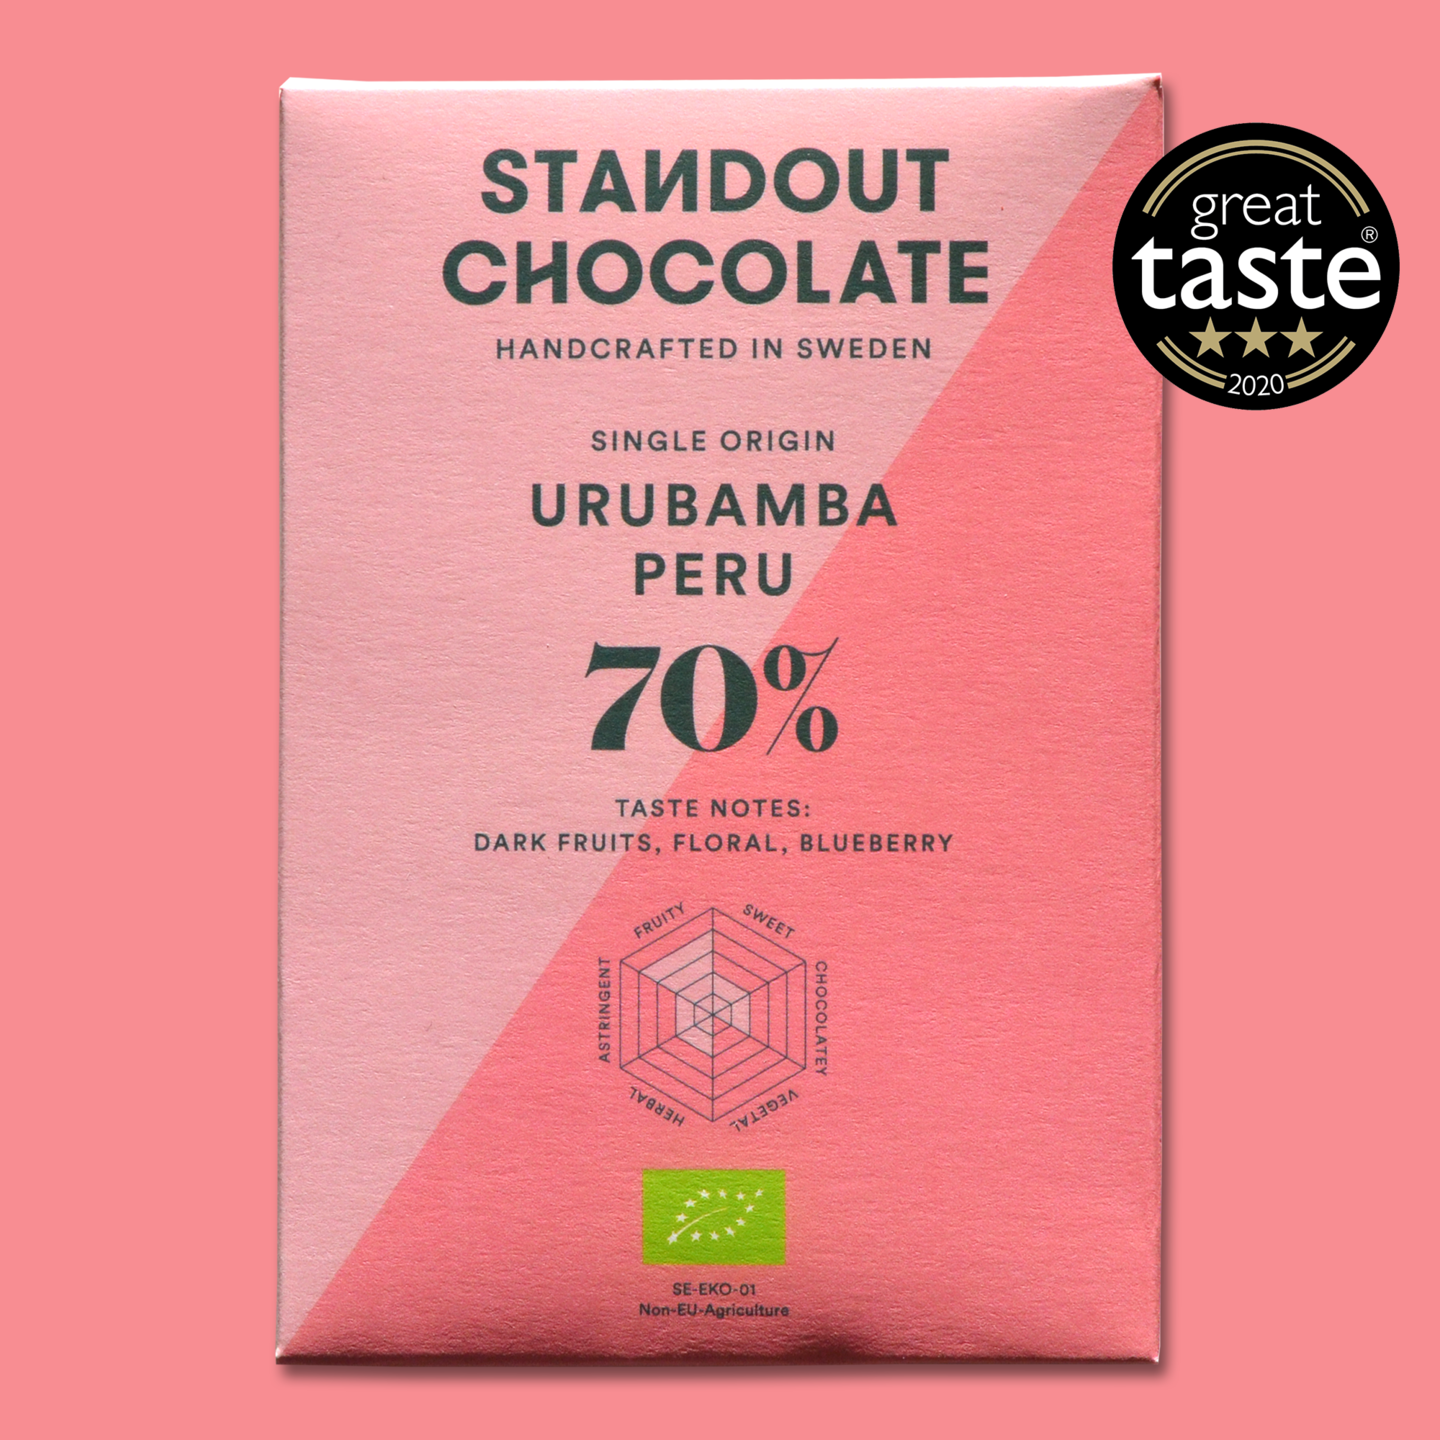 STANDOUT CHOCOLATE | Dunkle Schokolade »Urubamba Peru« 70% | 50g